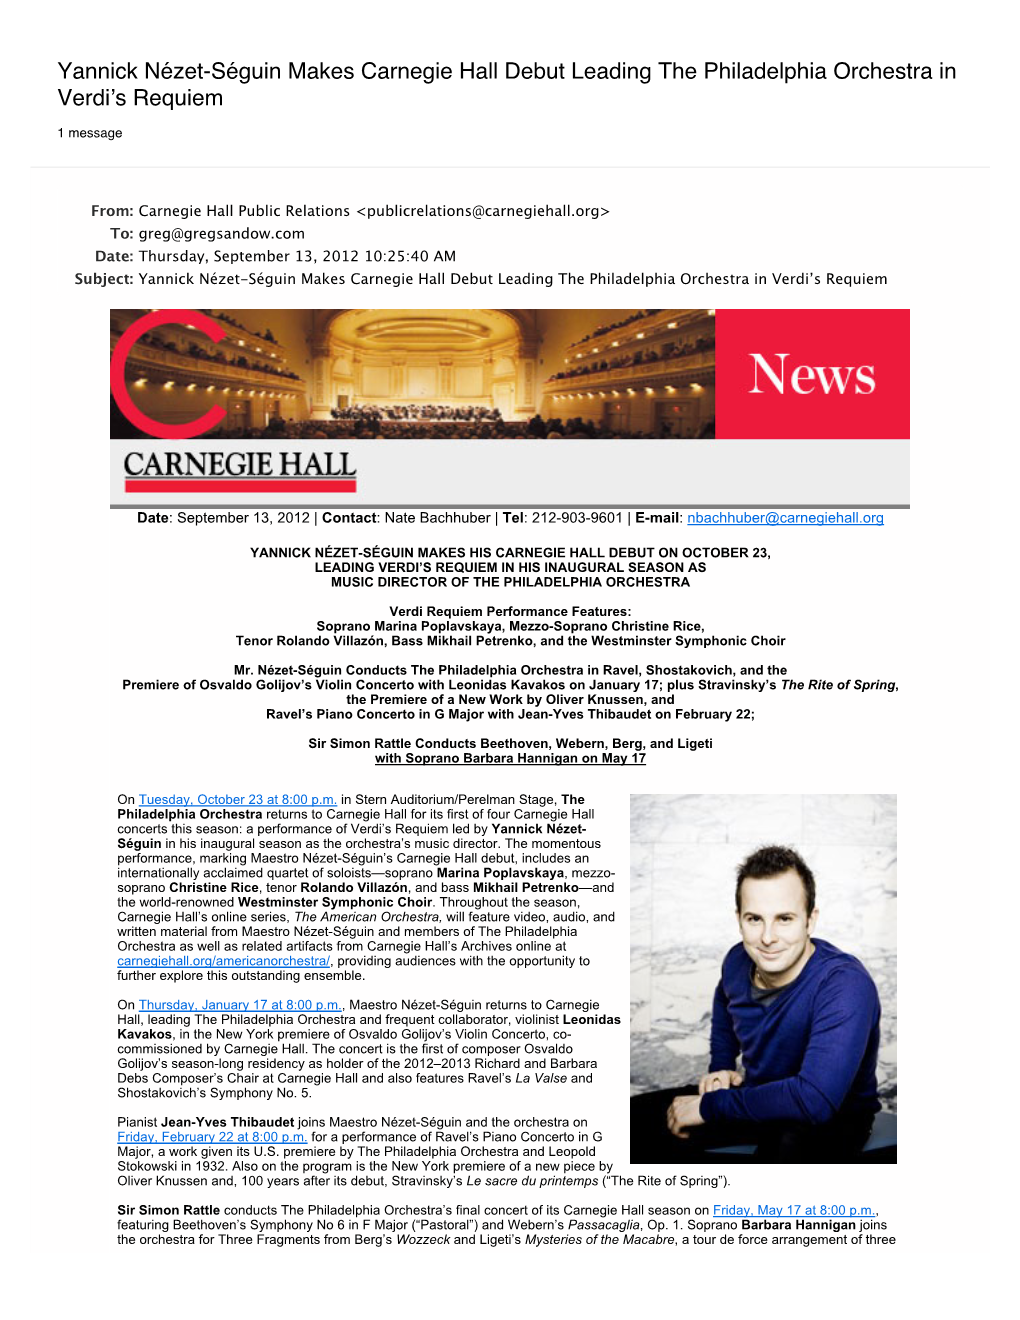 Carnegie Hall Press Release